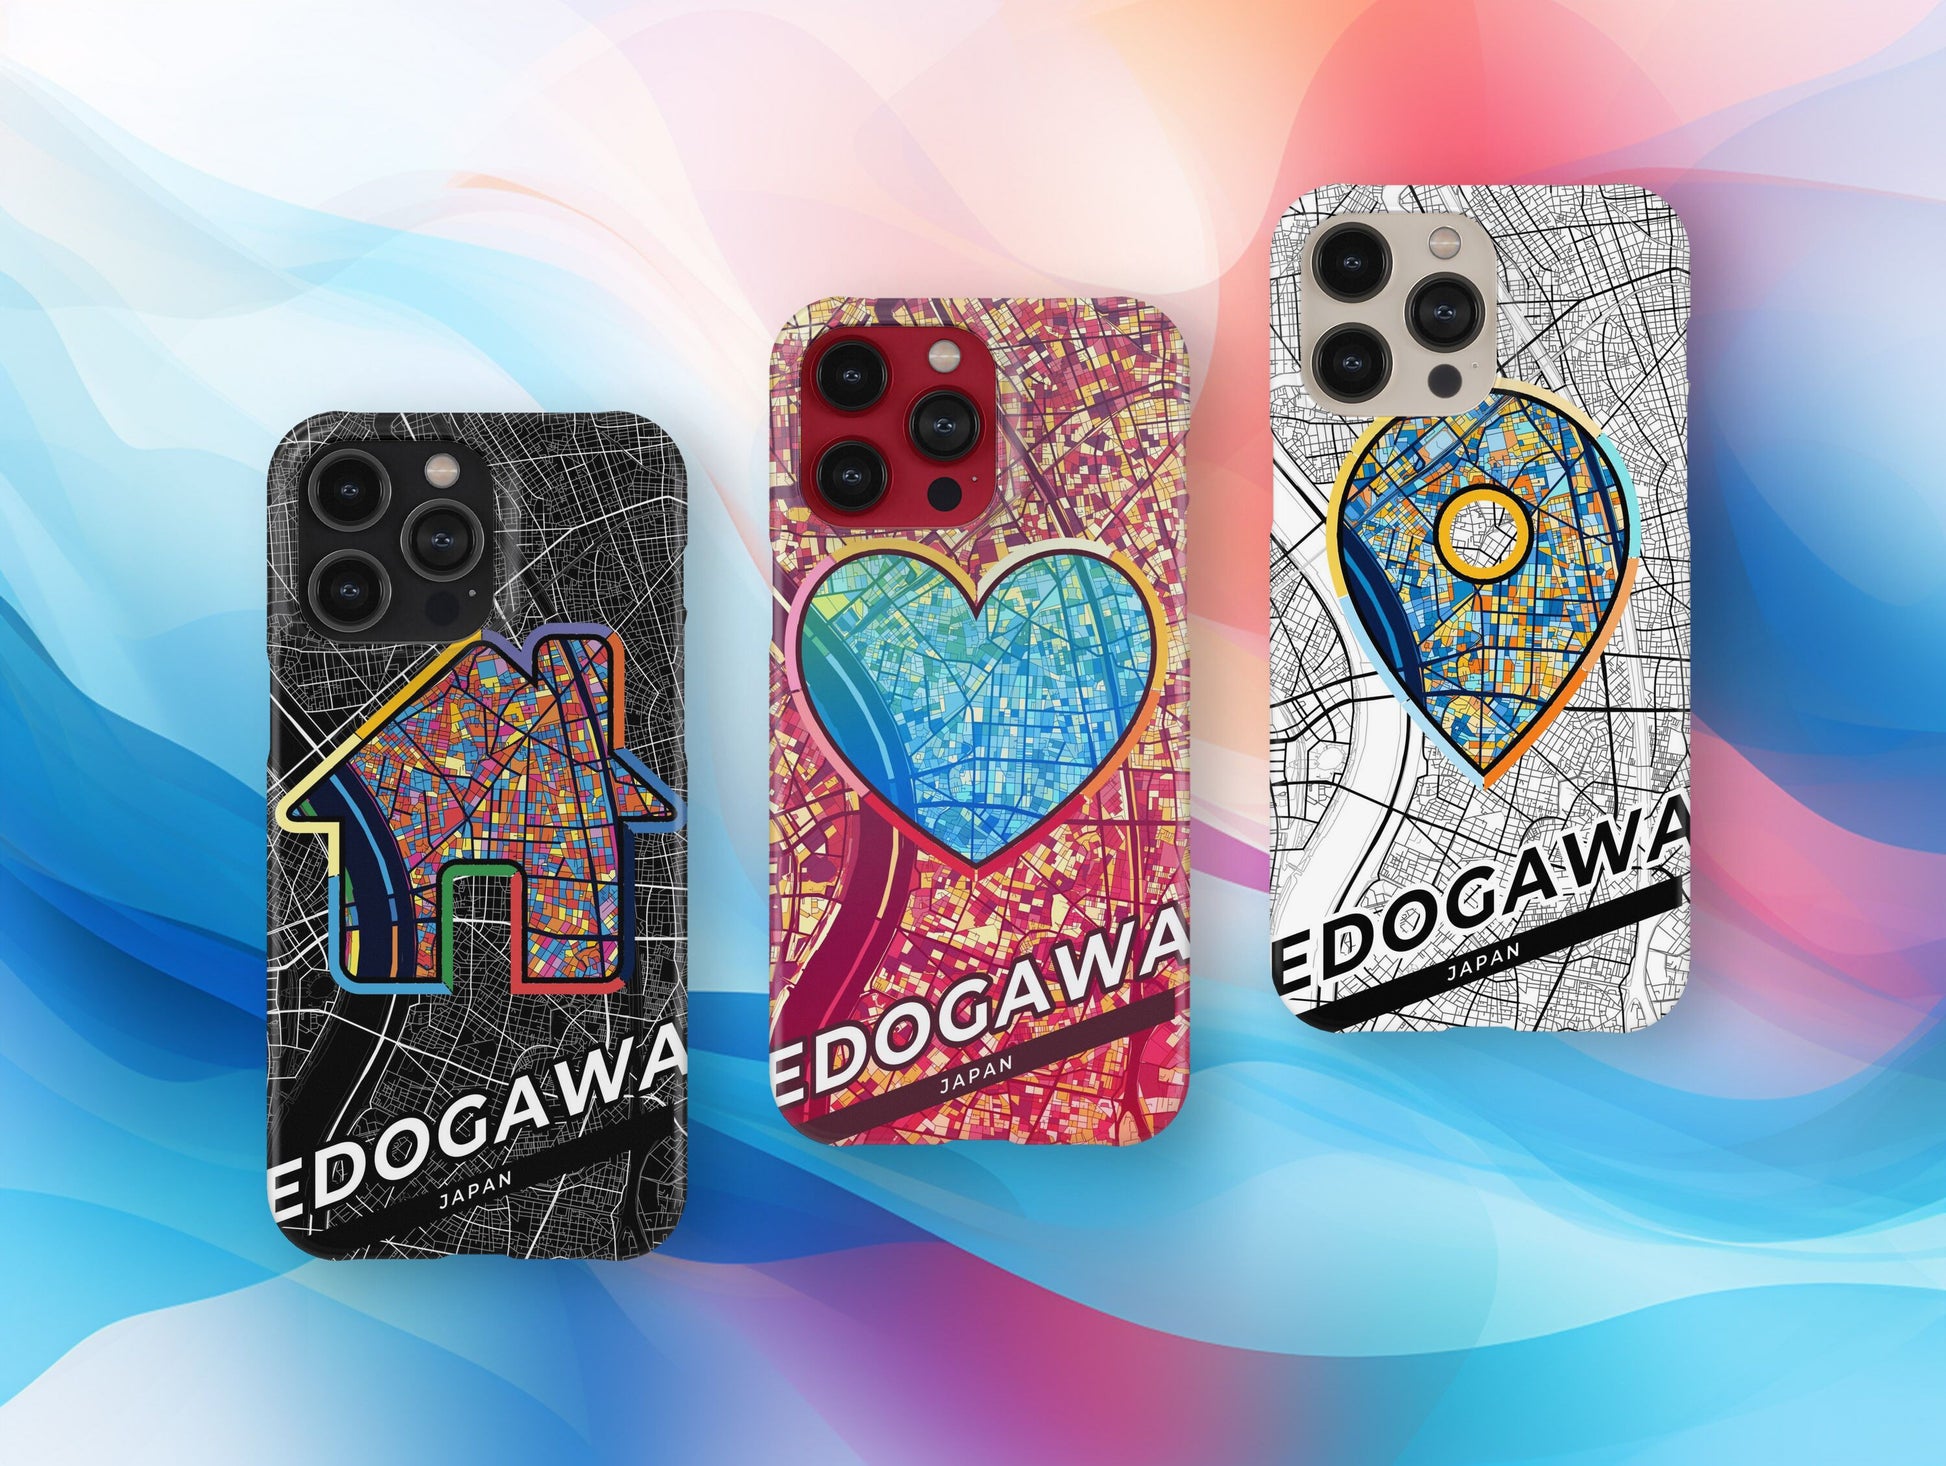 Edogawa Japan slim phone case with colorful icon. Birthday, wedding or housewarming gift. Couple match cases.